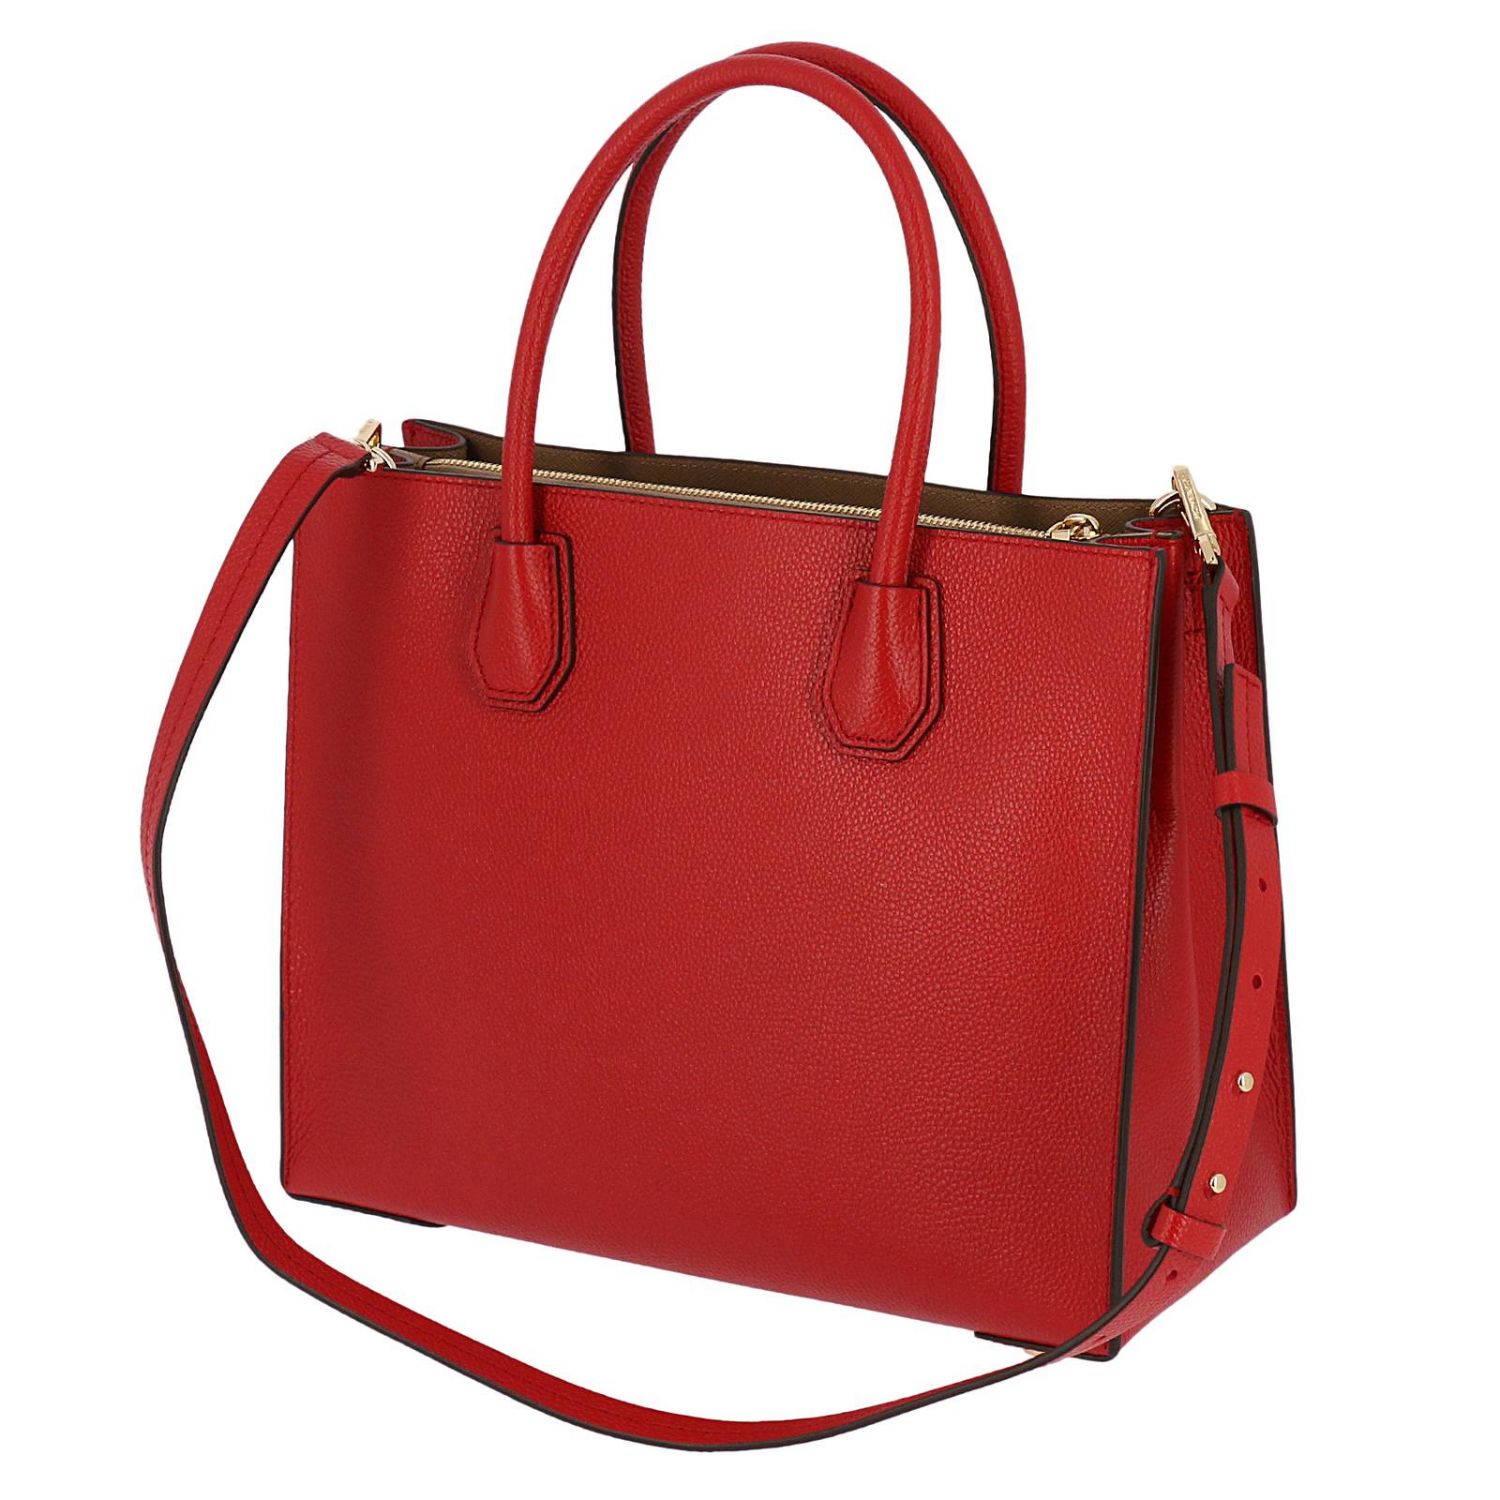 Michael Kors Outlet: Handbag women Michael - Red | Handbag Michael Kors ...